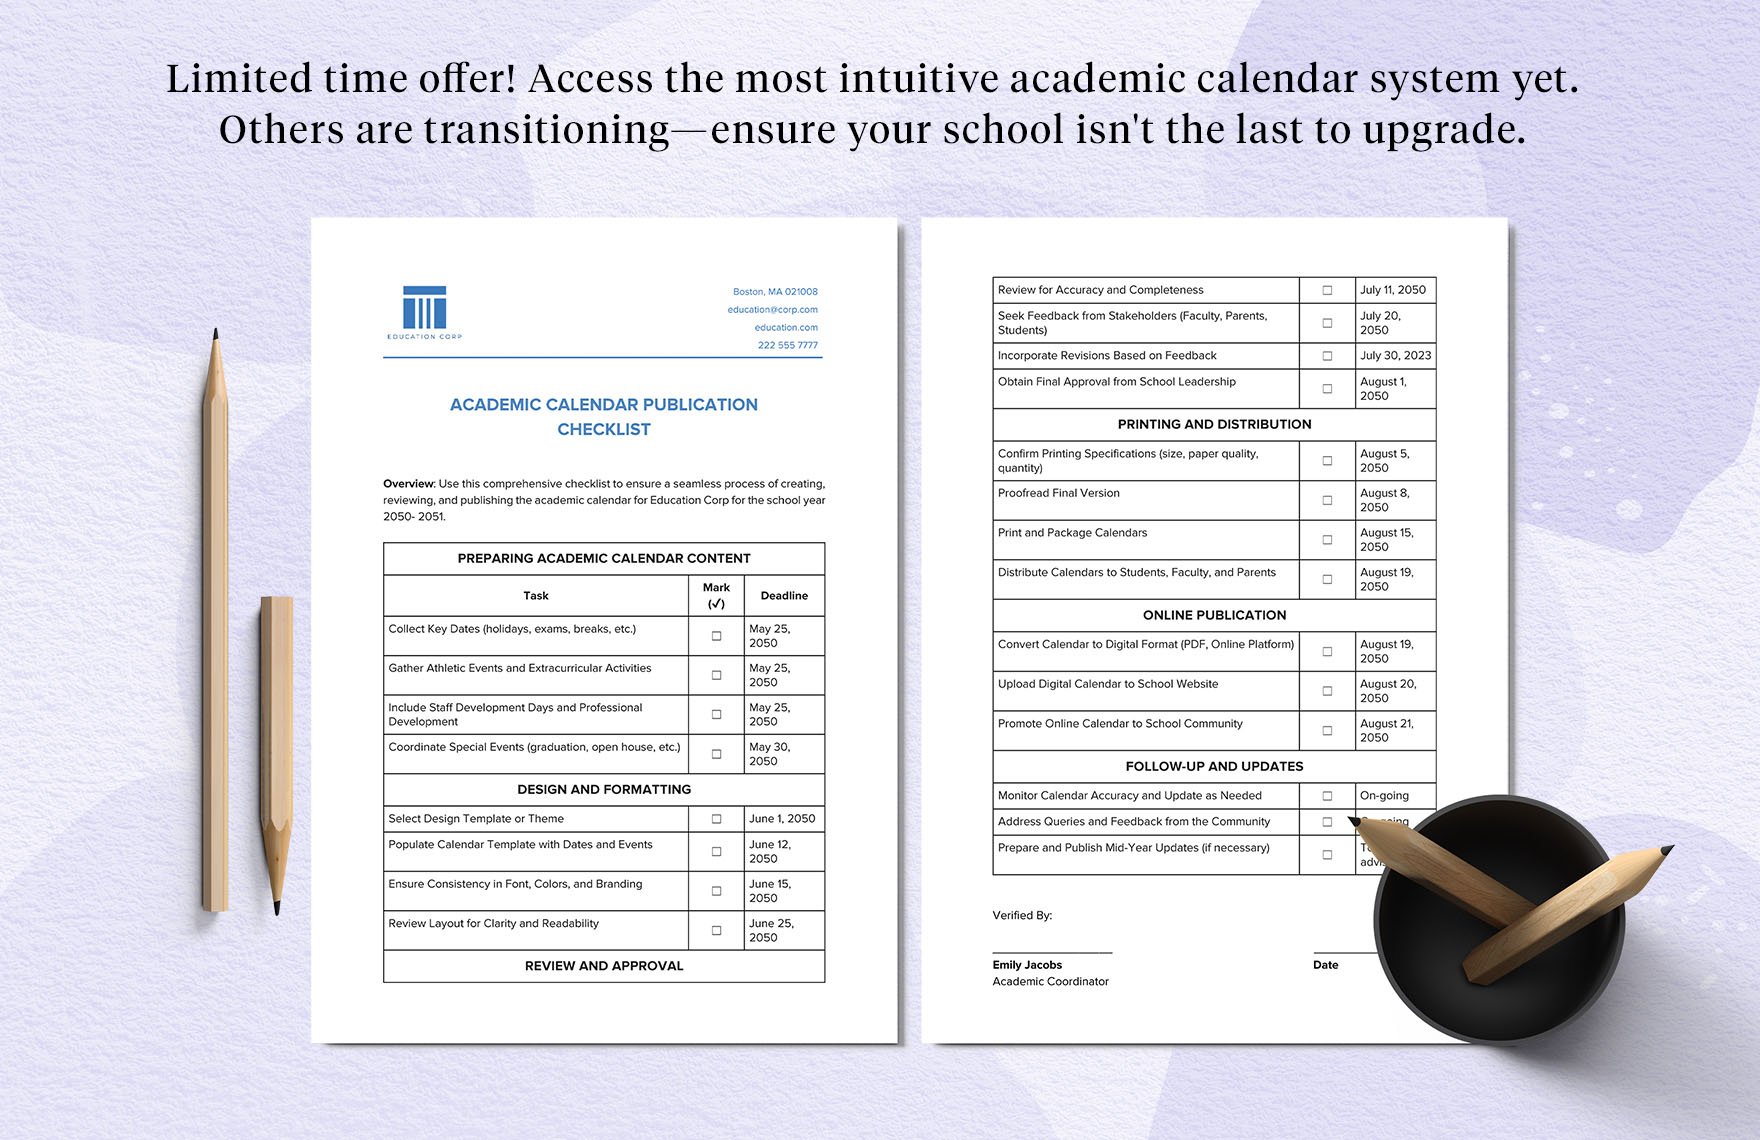 Academic Calendar Publication Checklist Template